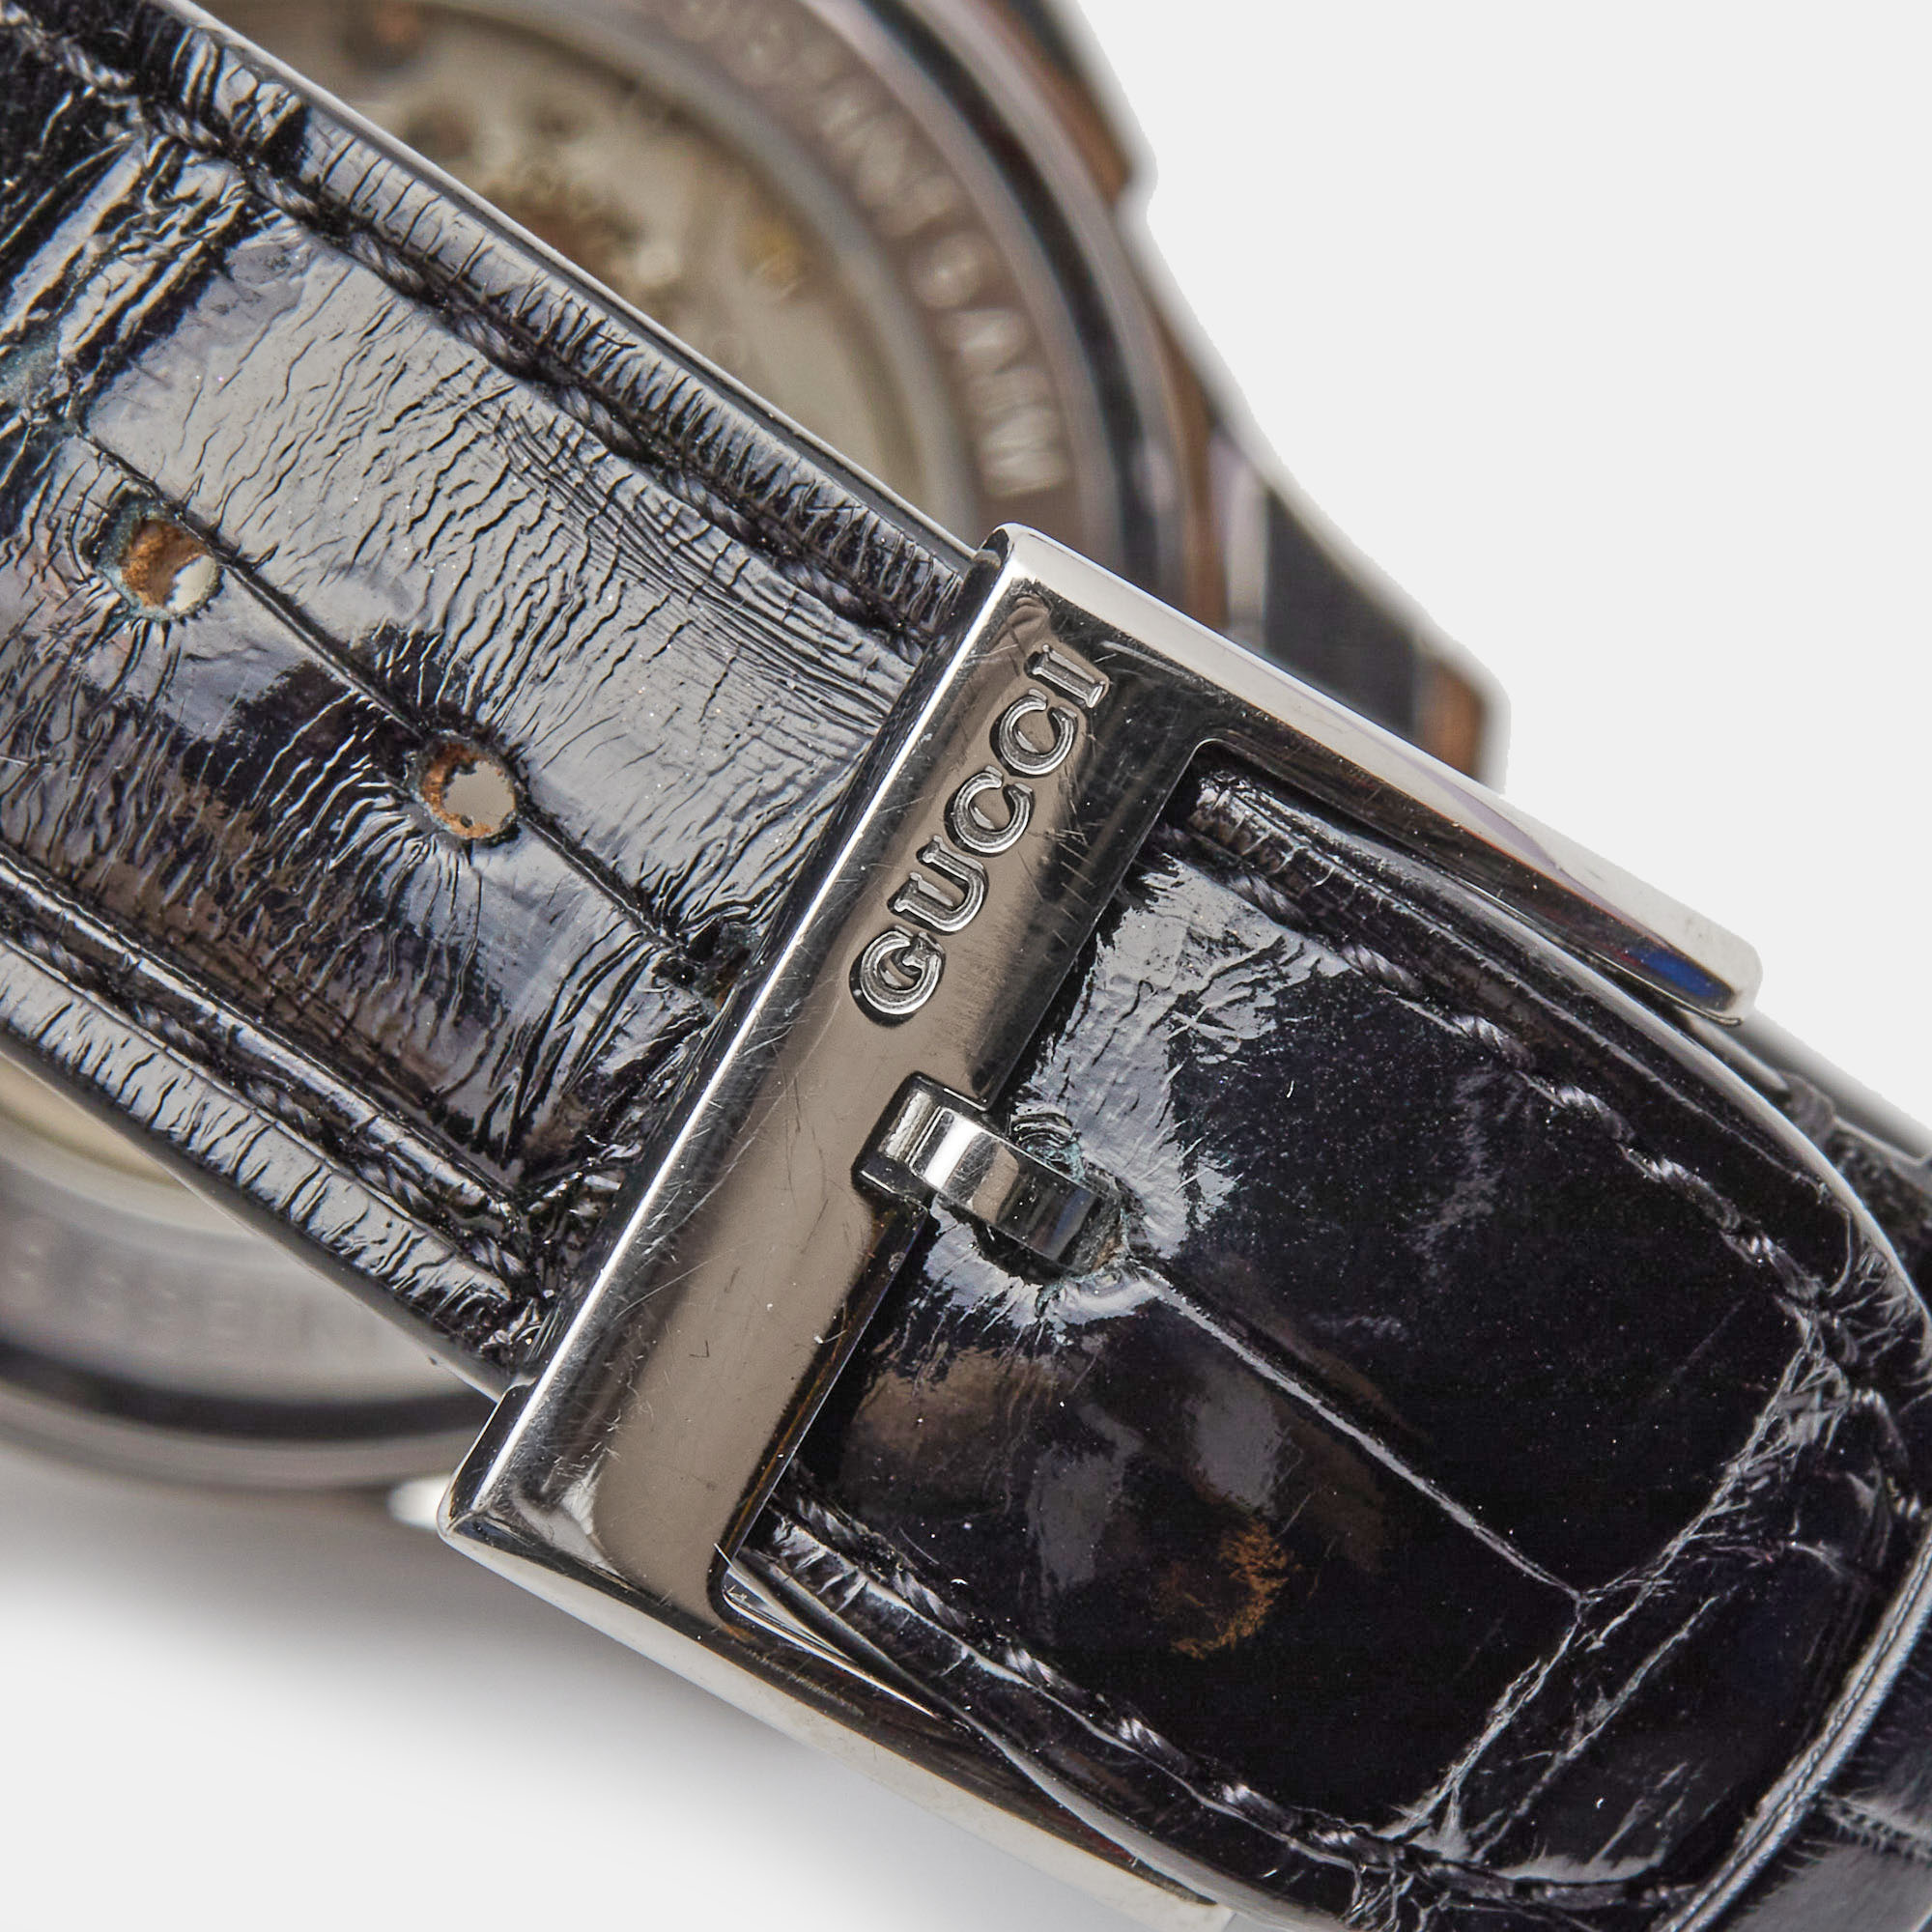 Gucci Black Stainless Steel Alligator Leather G-Timeless YA126469 Women's Wristwatch 38 Mm